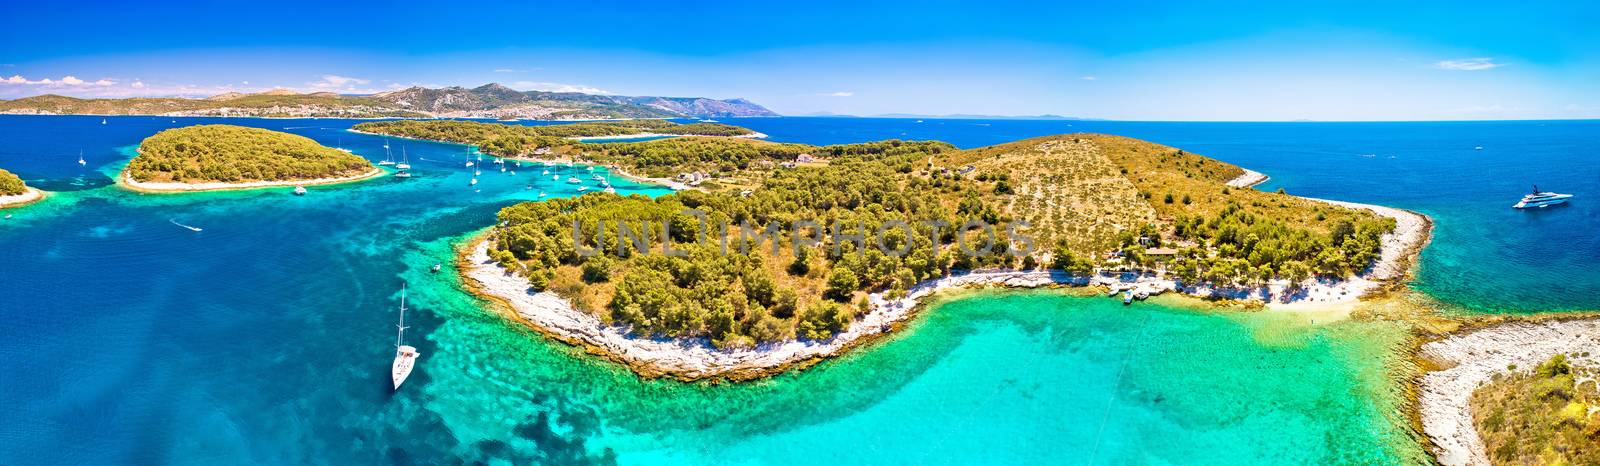 Pakleni otoci yachting destination arcipelago aerial panoramic view, Marinkovac island. Hvar, Dalmatia region of Croatia